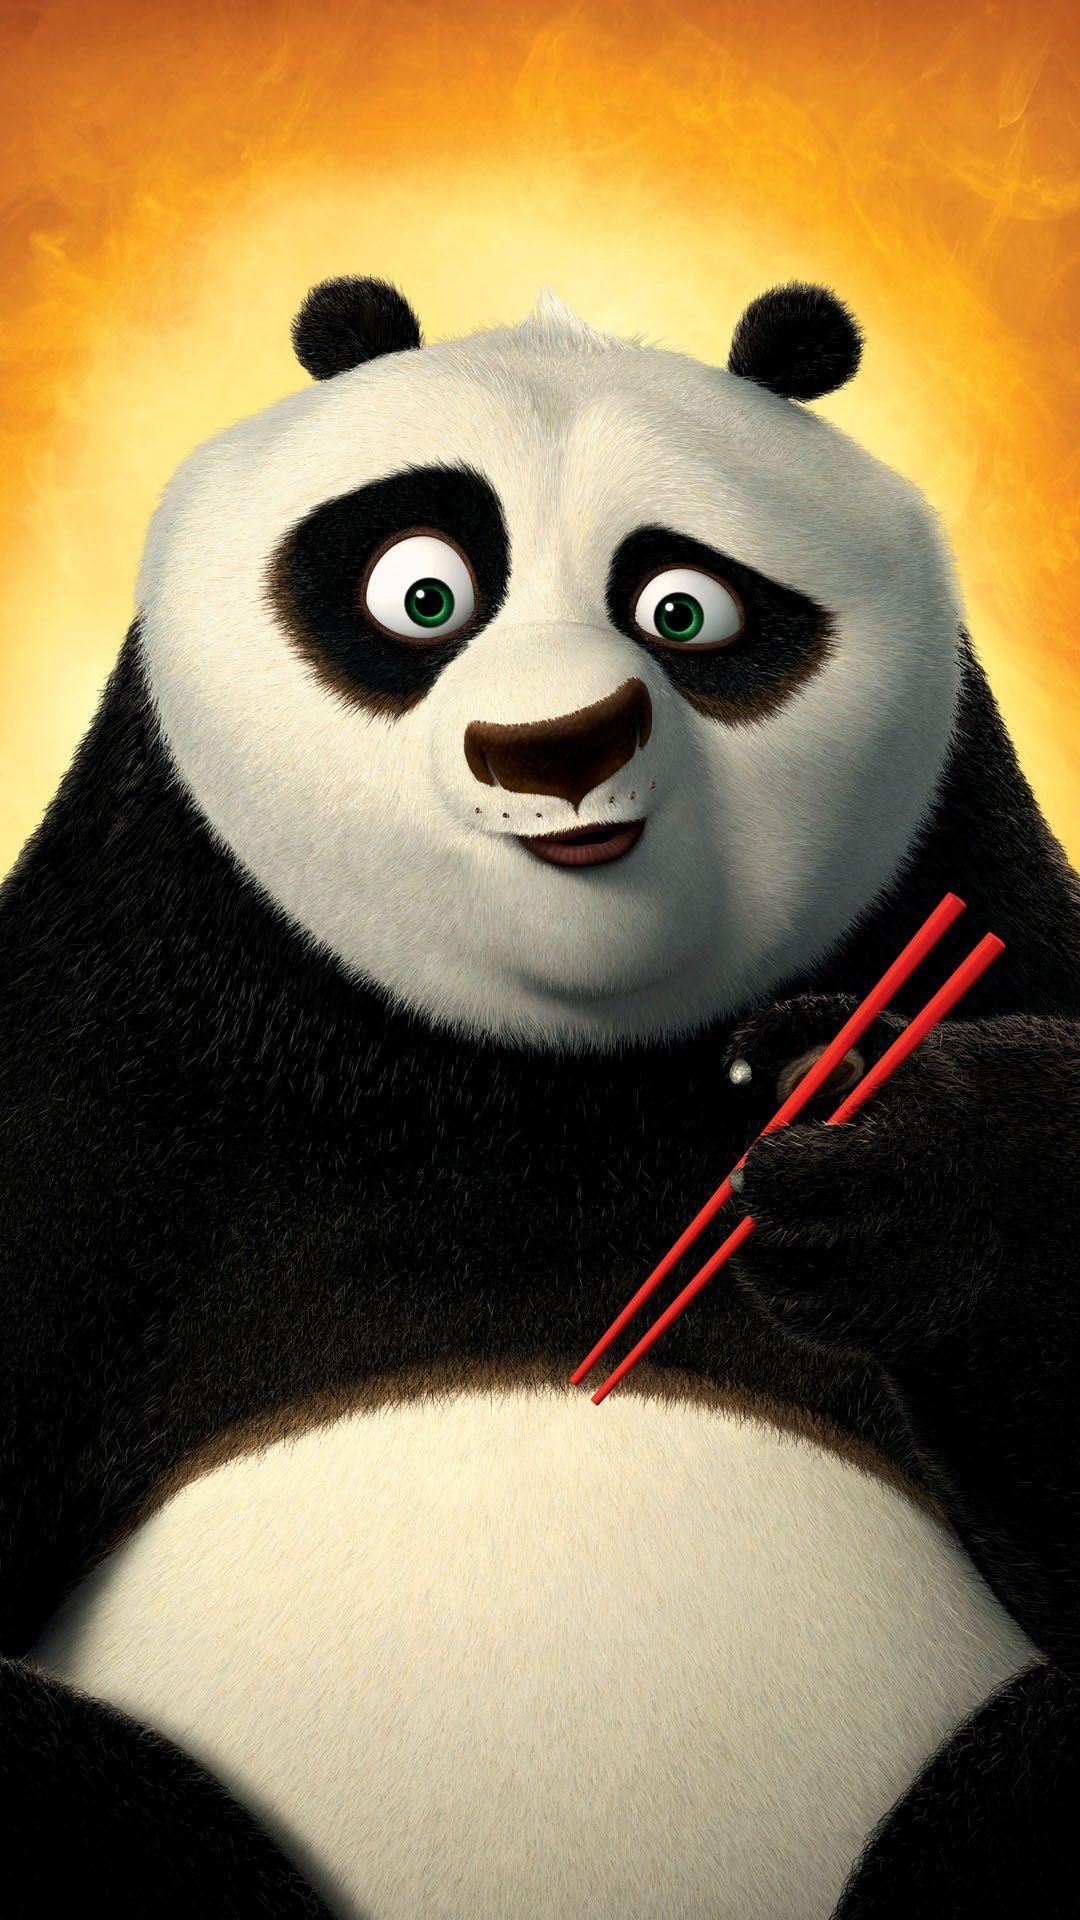 Fu Panda Android Wallpaper free download